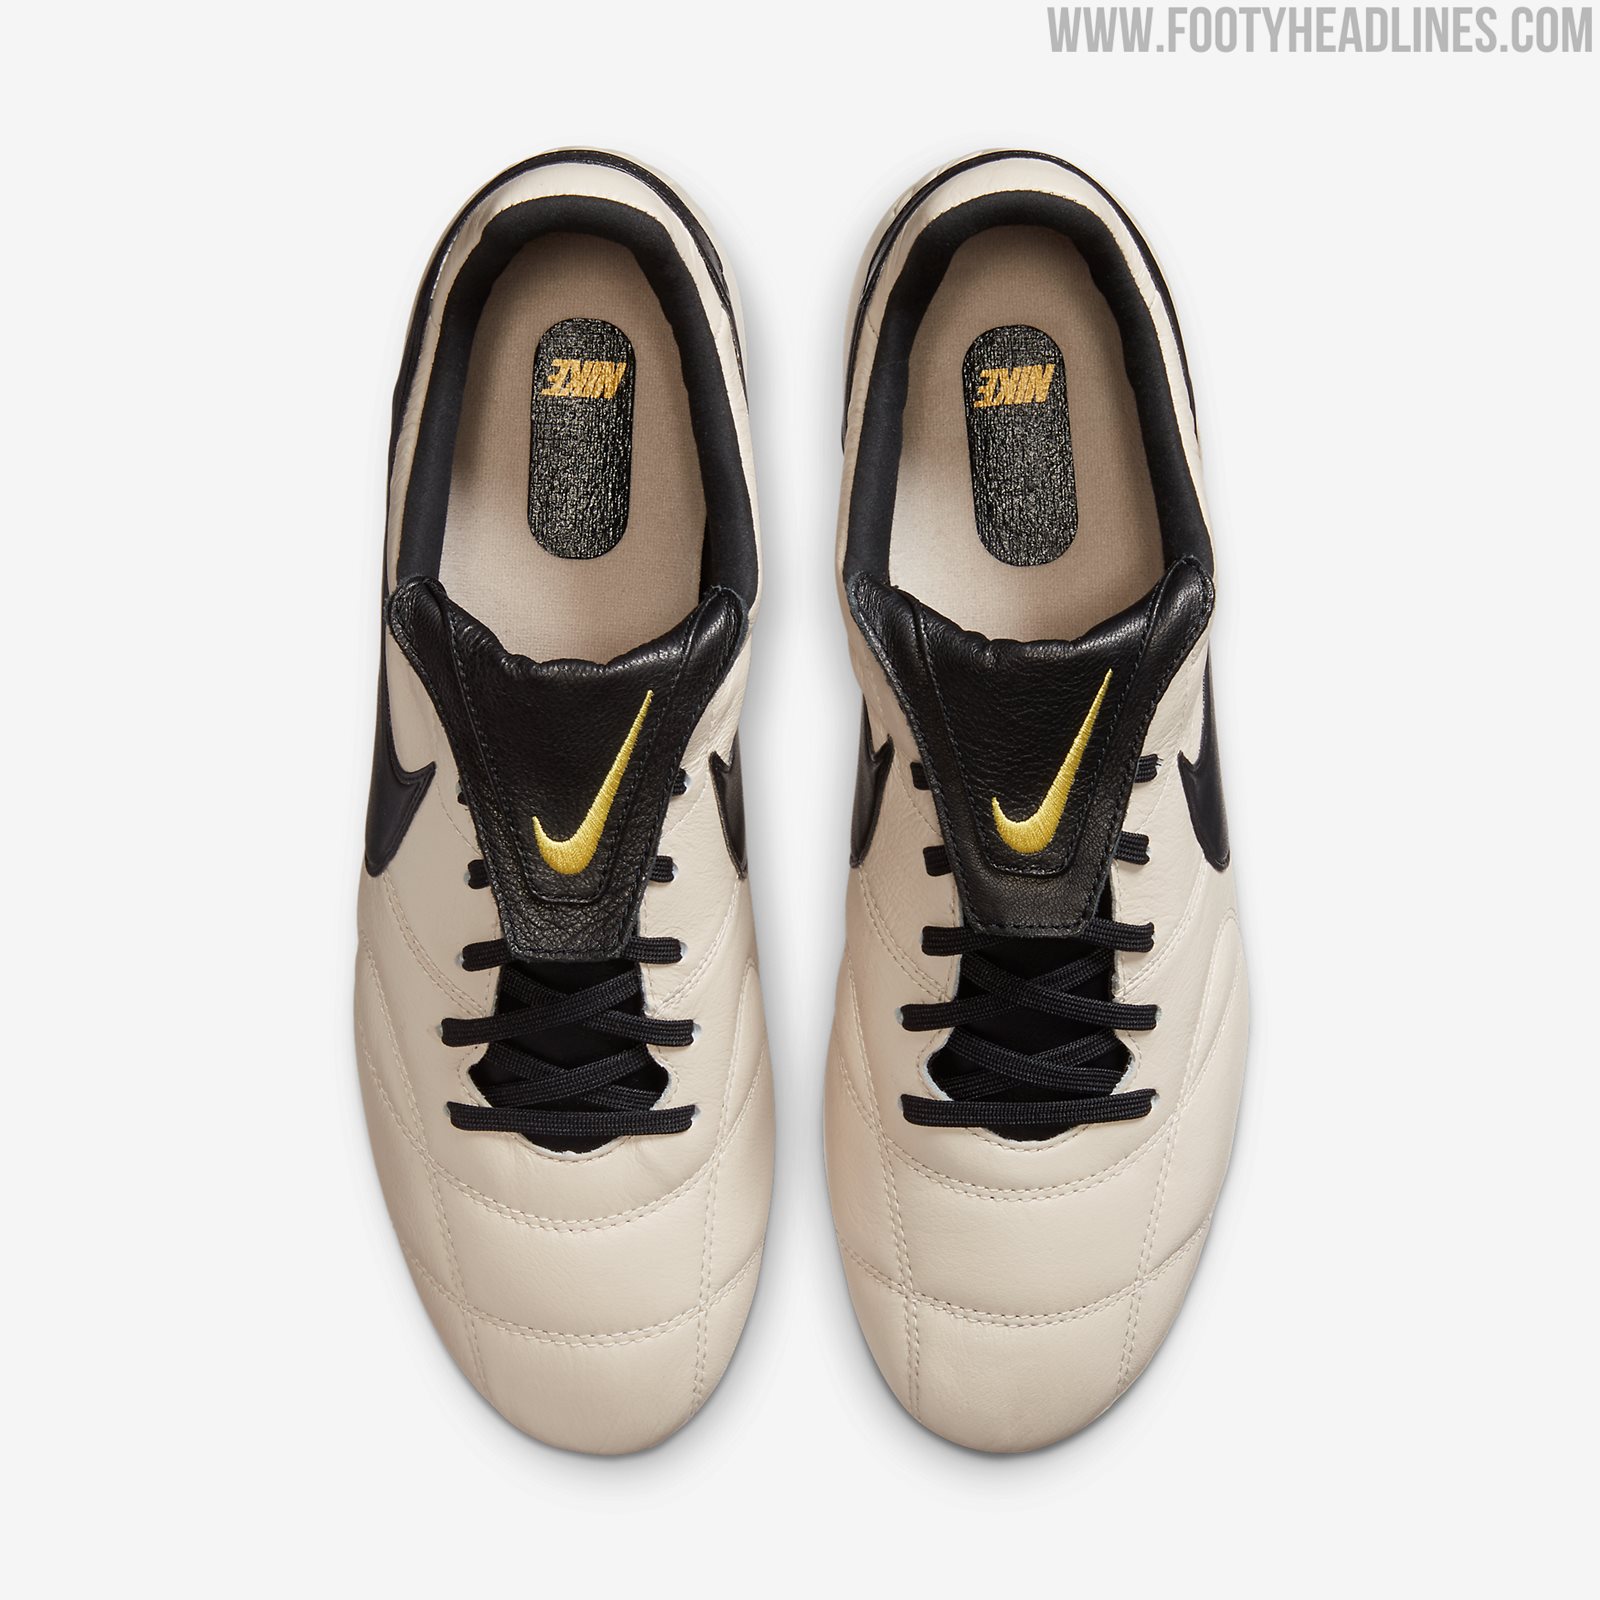 'Oatmeal' R10-Inspired Nike Premier II 2020 Boots Released - Footy ...